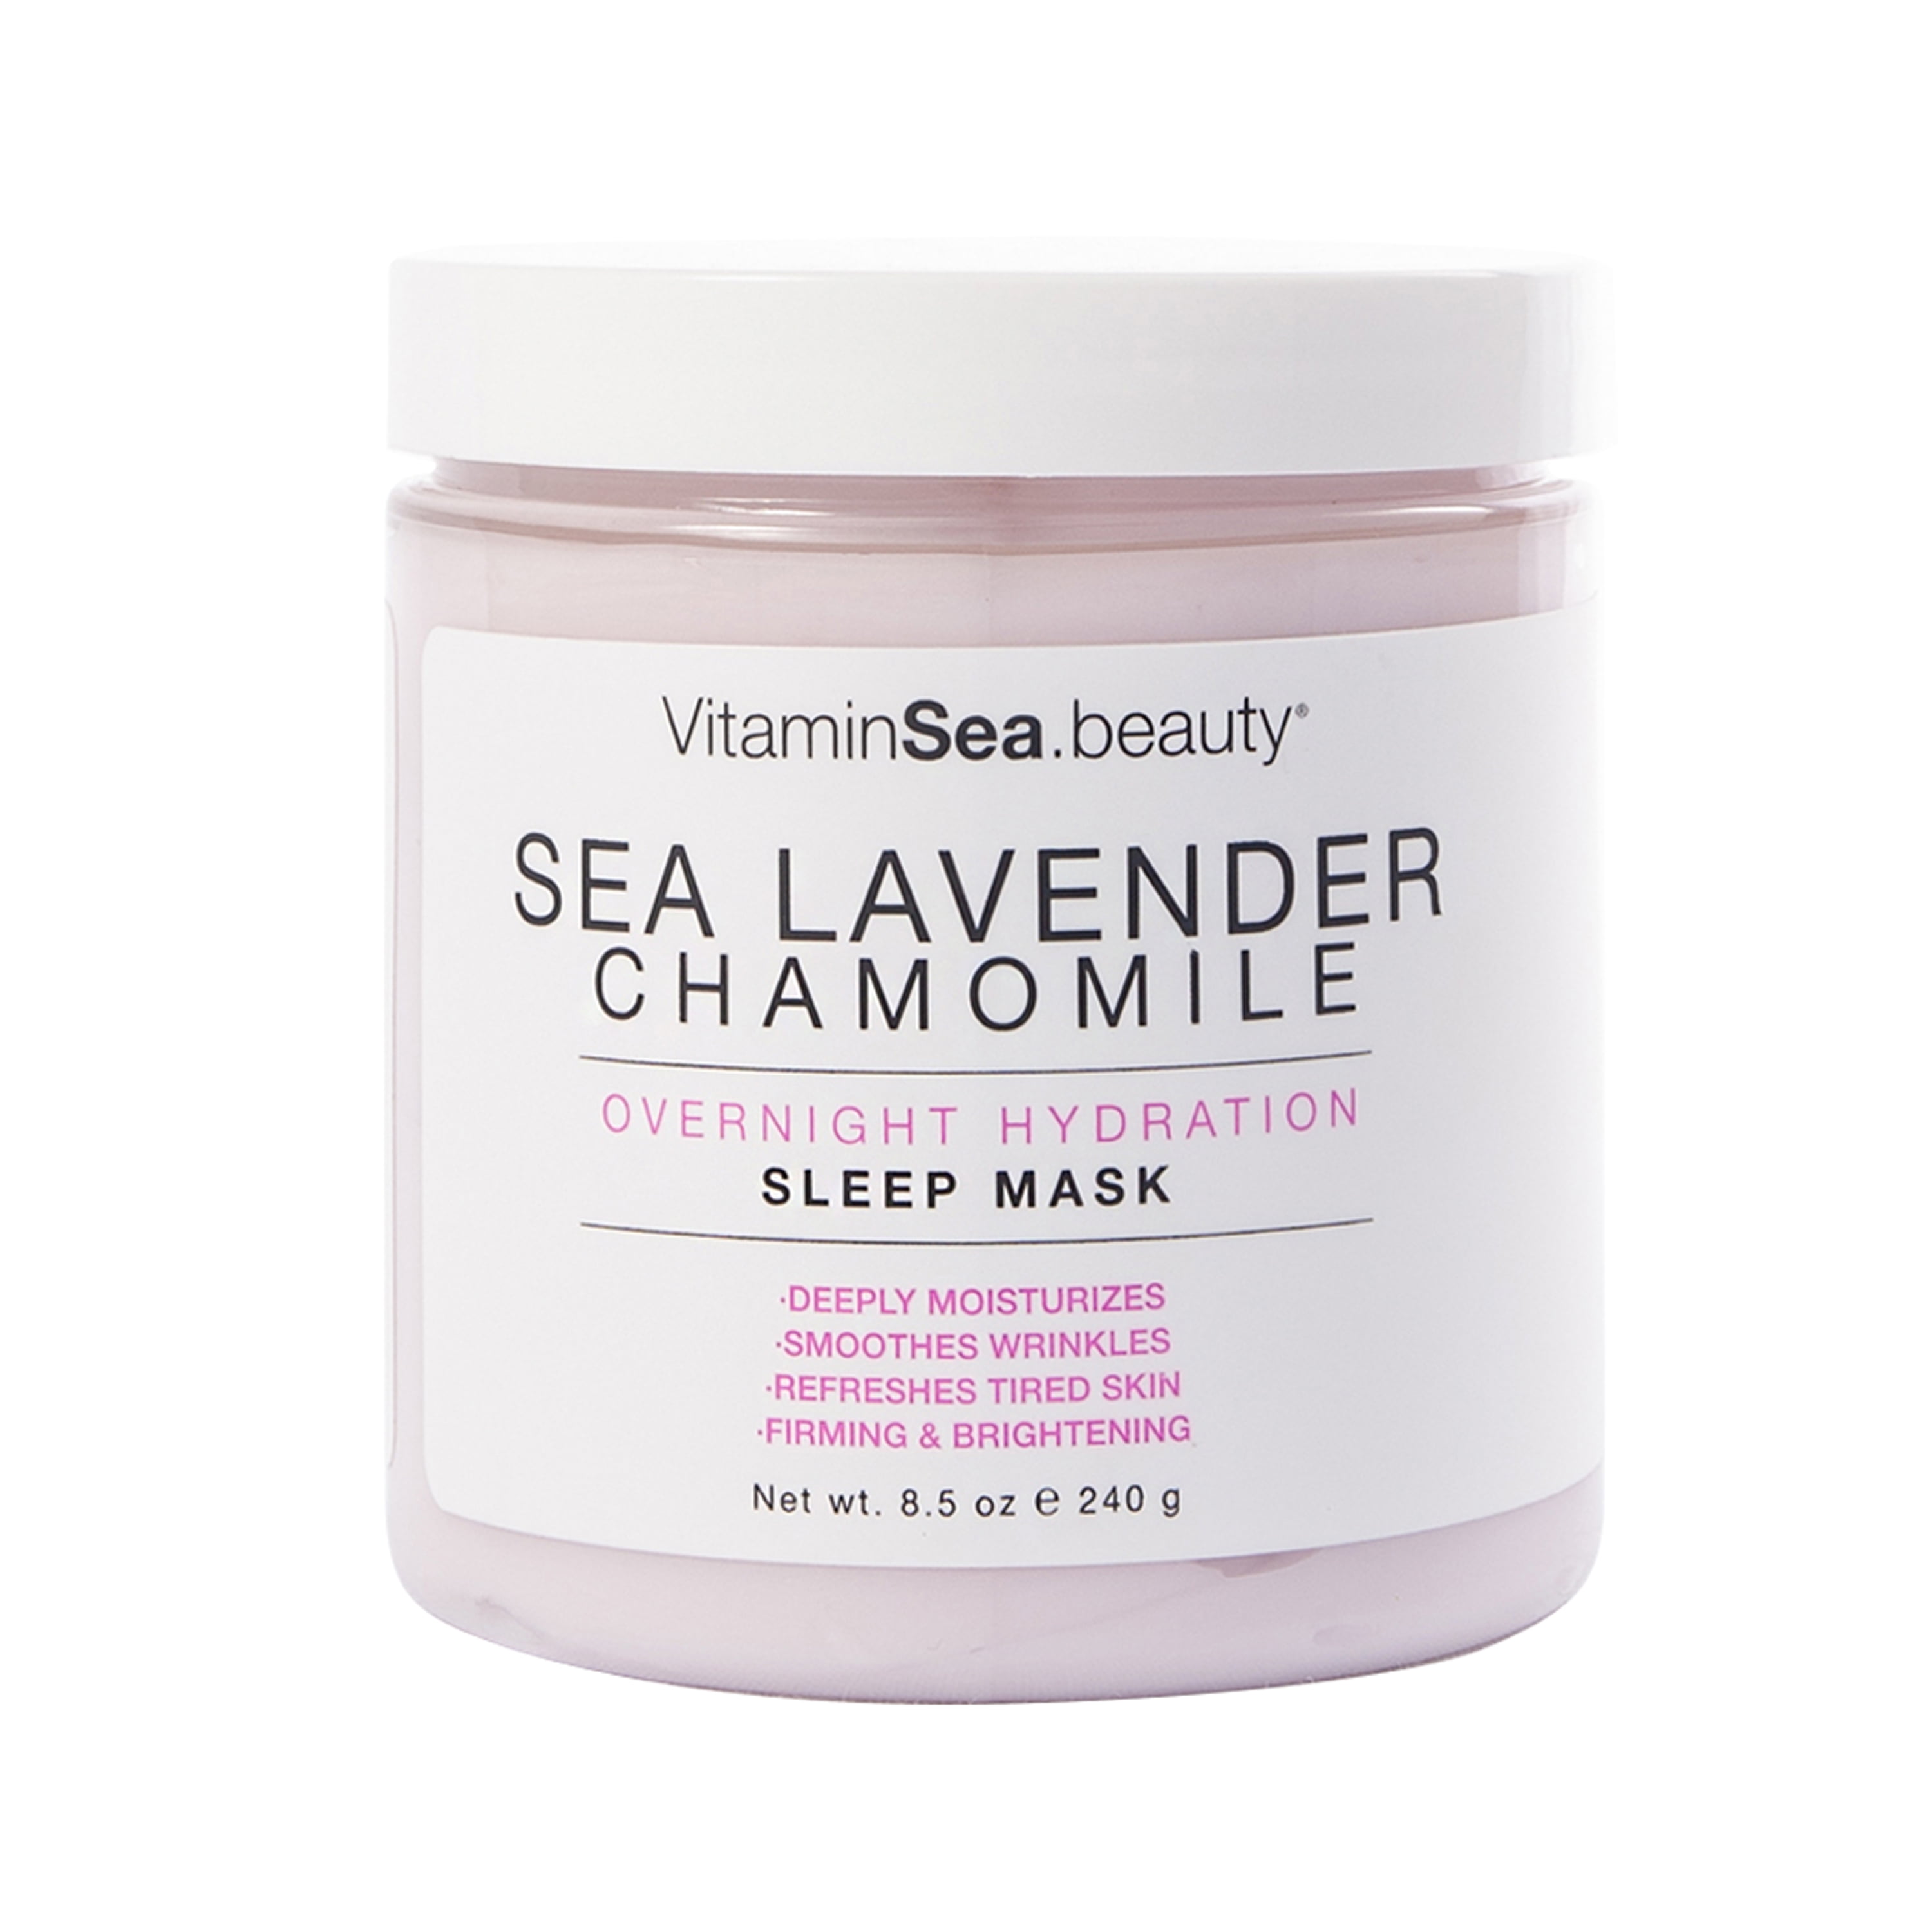 Vitamins and Sea beauty Overnight Hydration Sea Lavender & Chamomile Sleep Mask, 8.5 oz